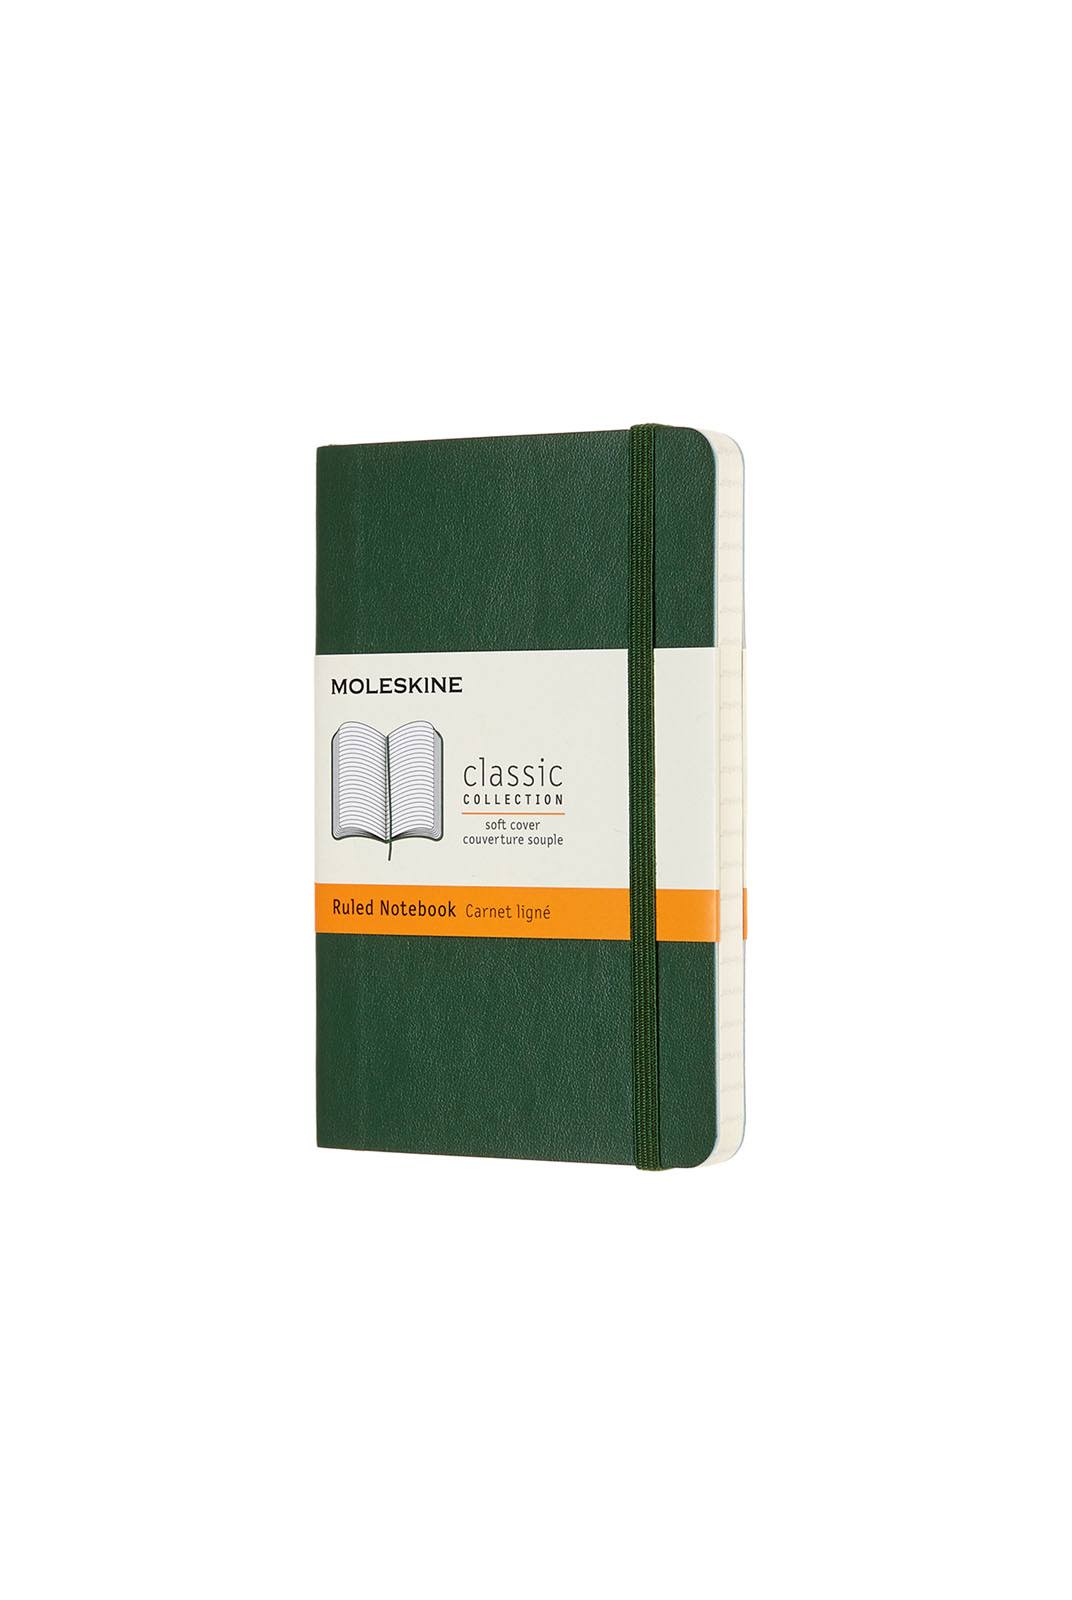 Moleskine Classic Pocket Soft Cover Notebook, Ruled / Myrtle Green